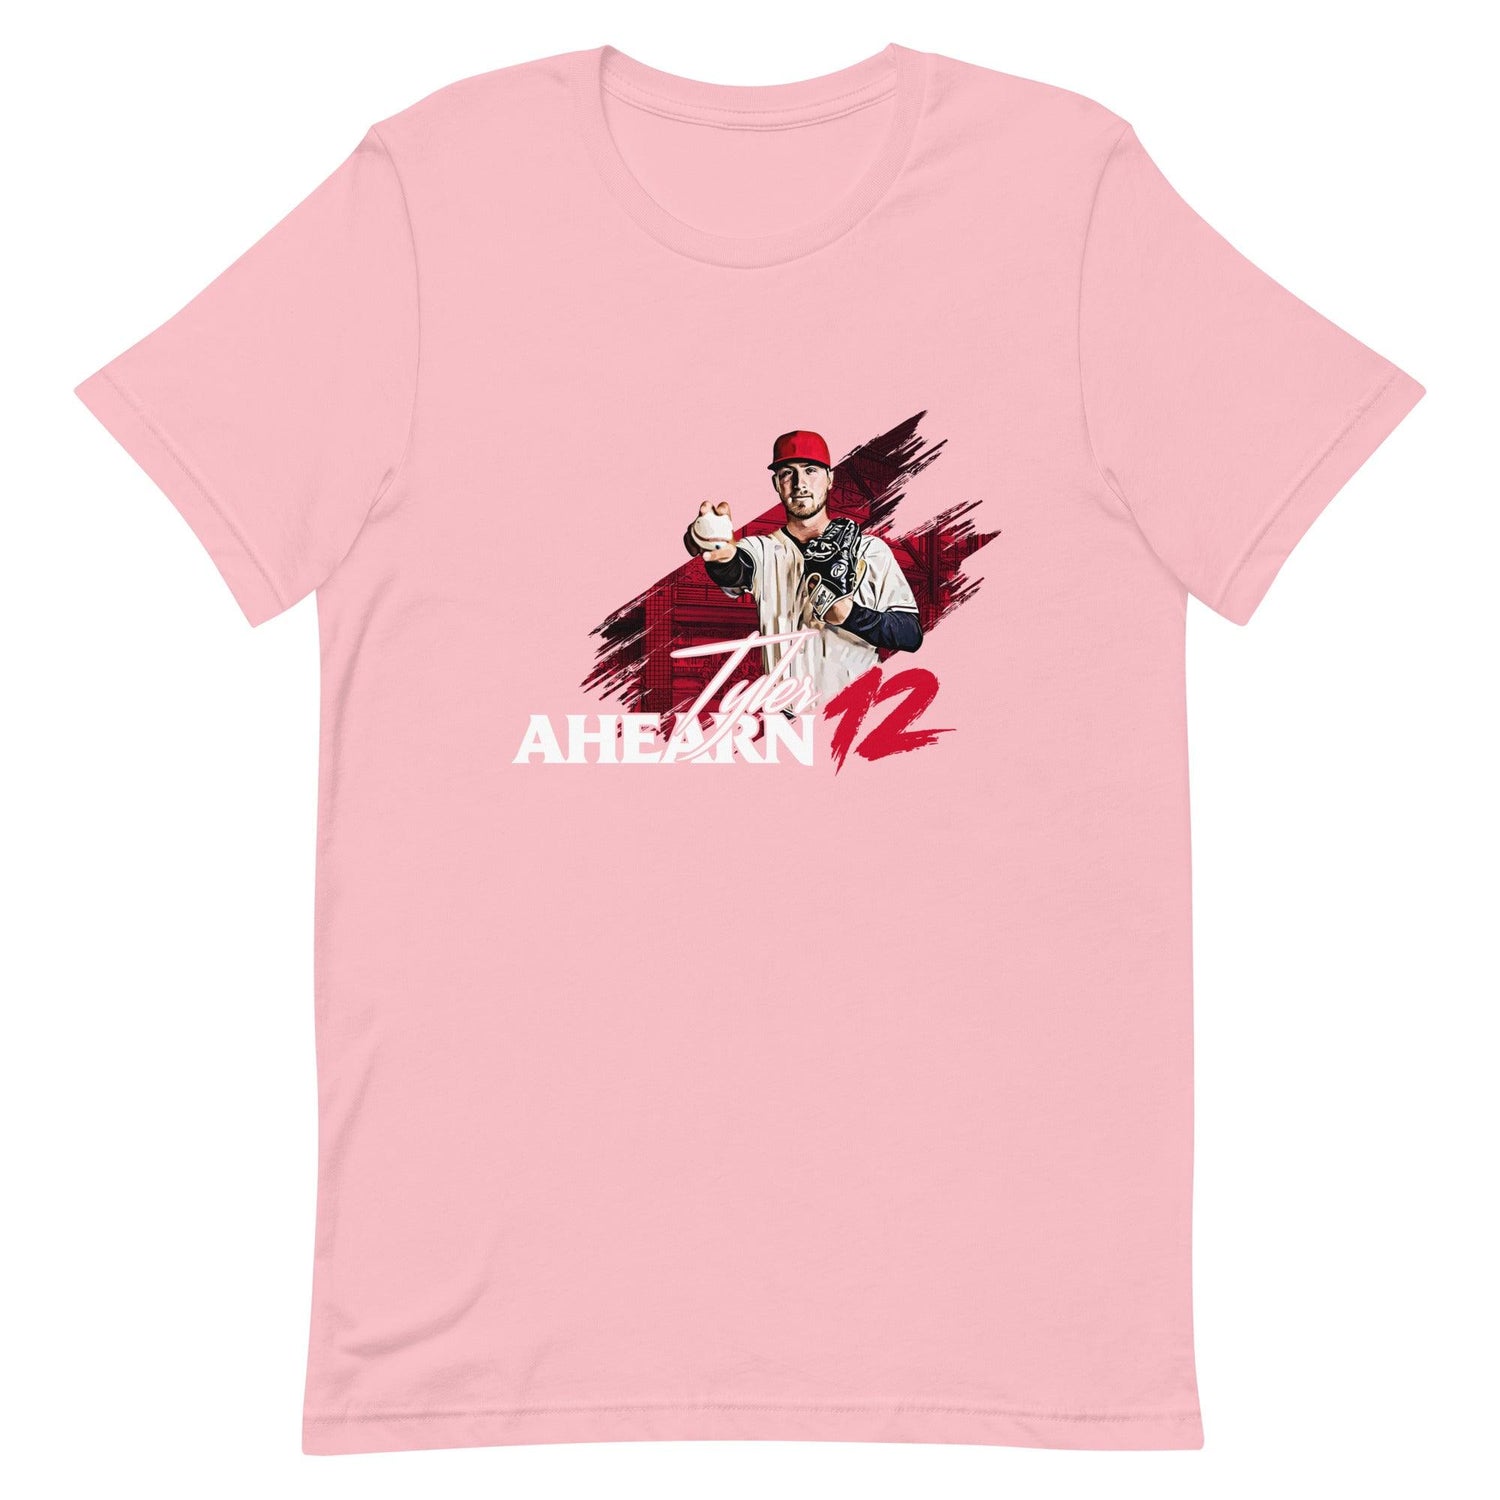 Tyler Ahearn “Essential” t-shirt - Fan Arch